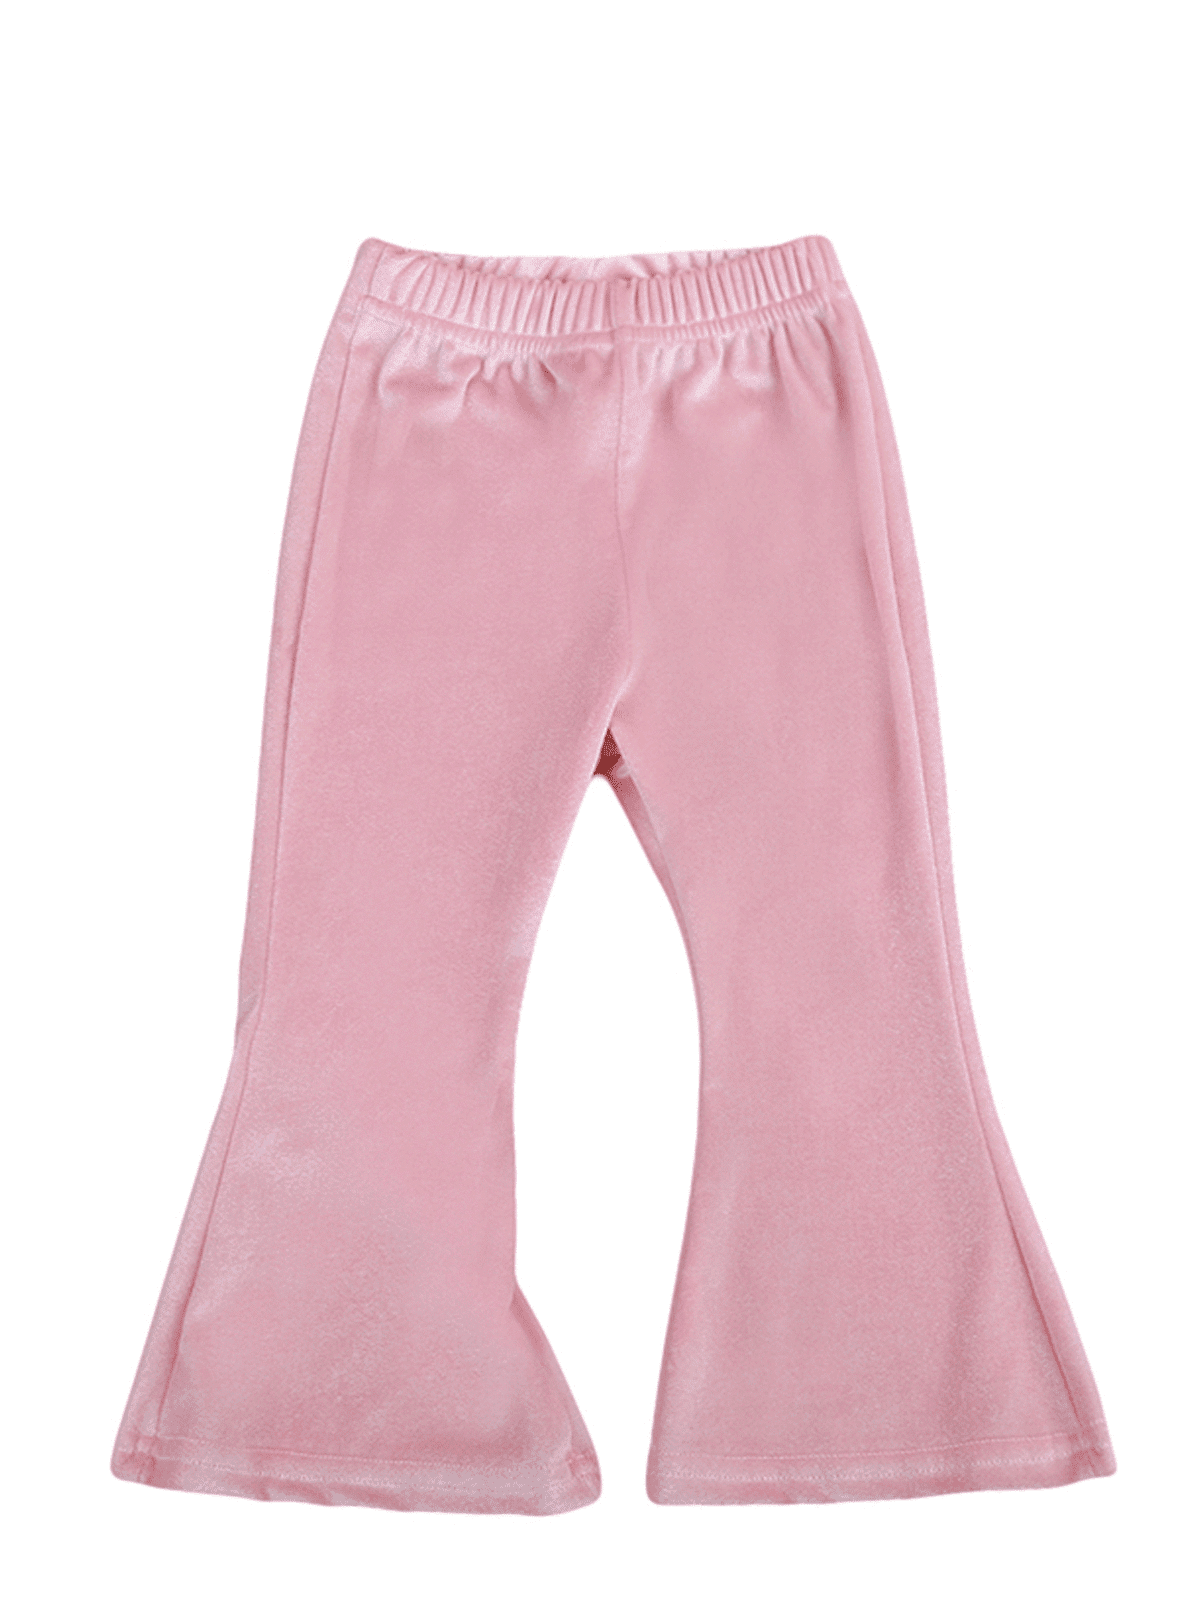 UNITED COLORS OF BENETTON Cotton Mix Pants D 110 Beige Kids Girls Trousers 